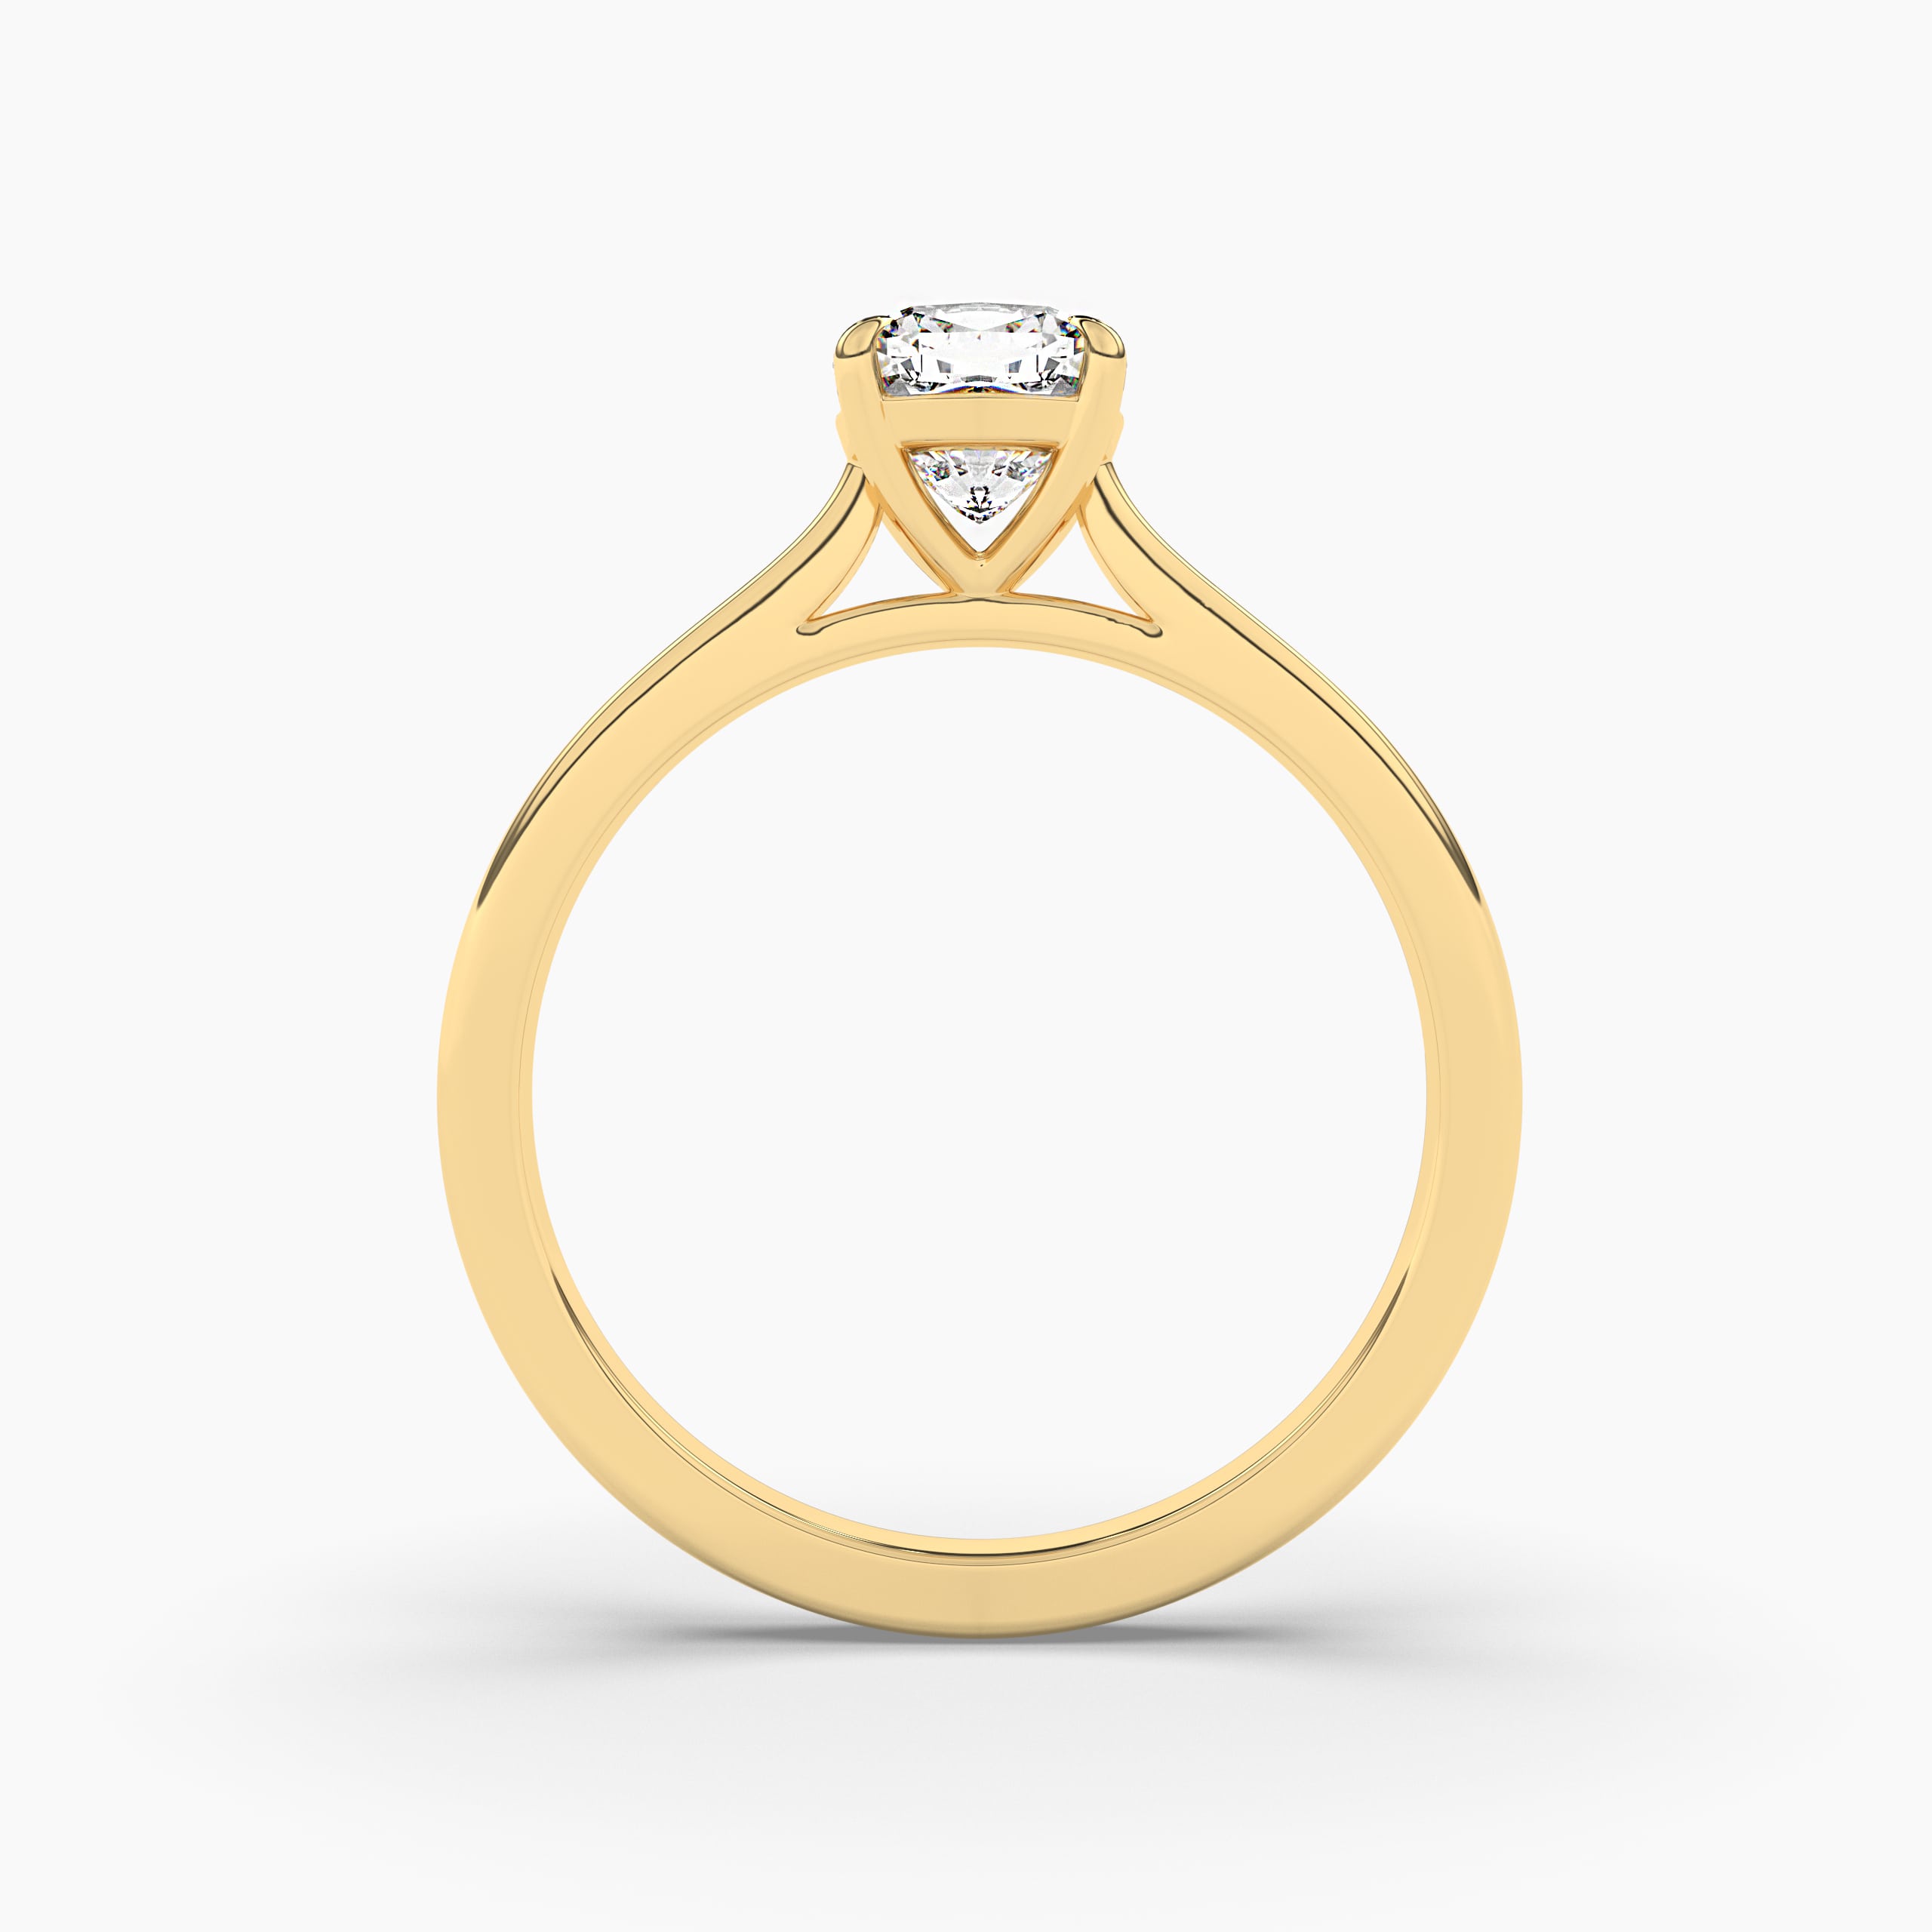 Cushion Cut Engagement Ring, Solitaire Diamond Ring, Yellow Gold Diamond Ring